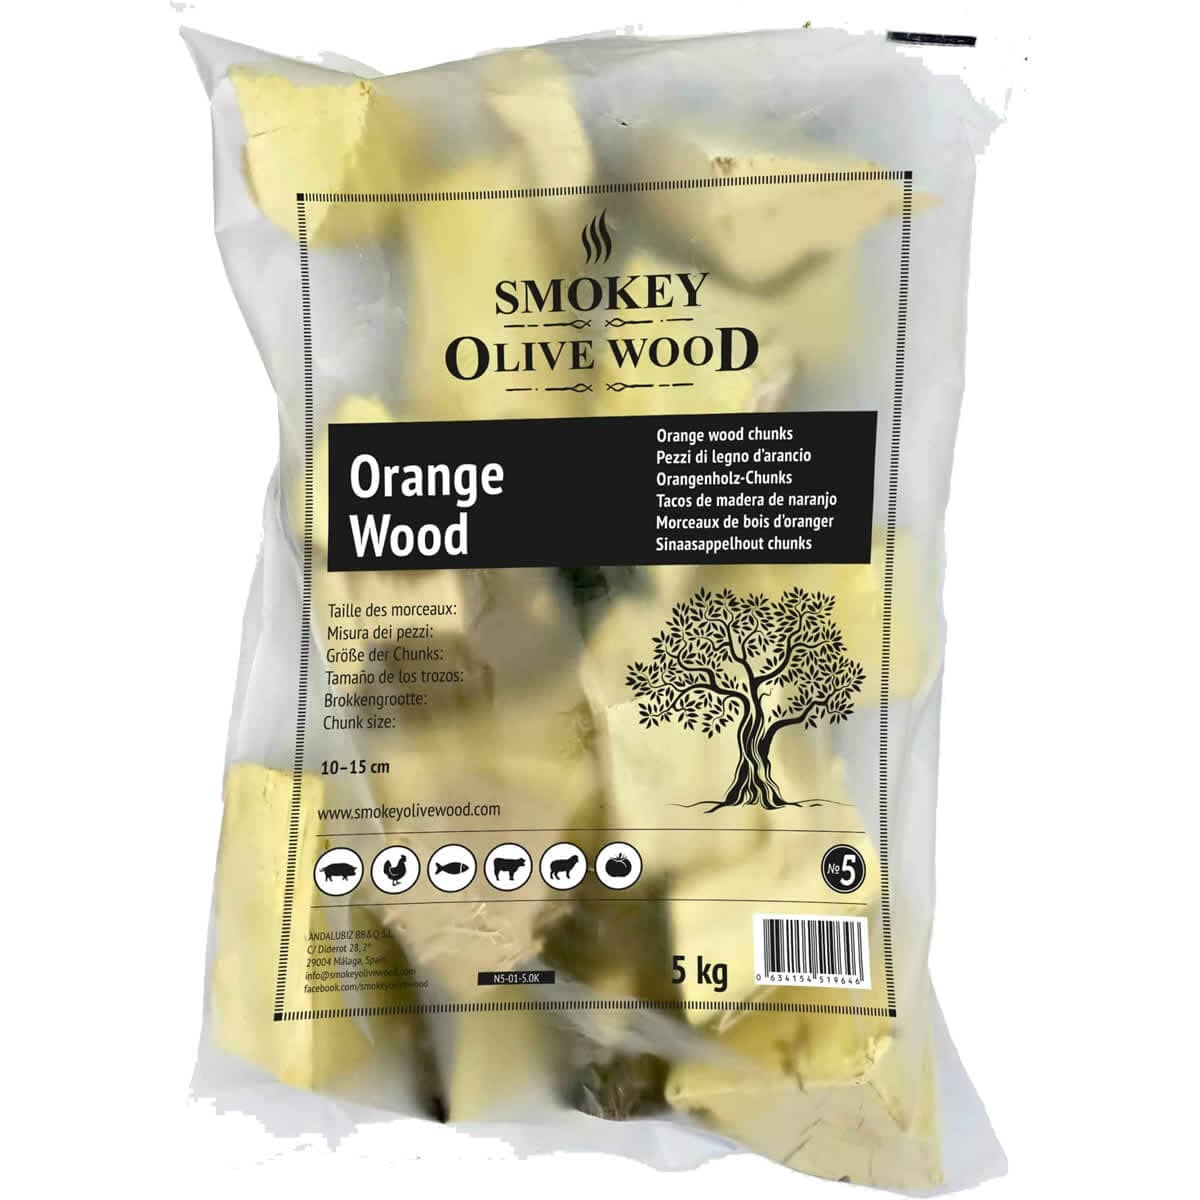 Smokey Olive Wood 500mL Olive Wood Smoking Chips coarse grain size 2-3cm